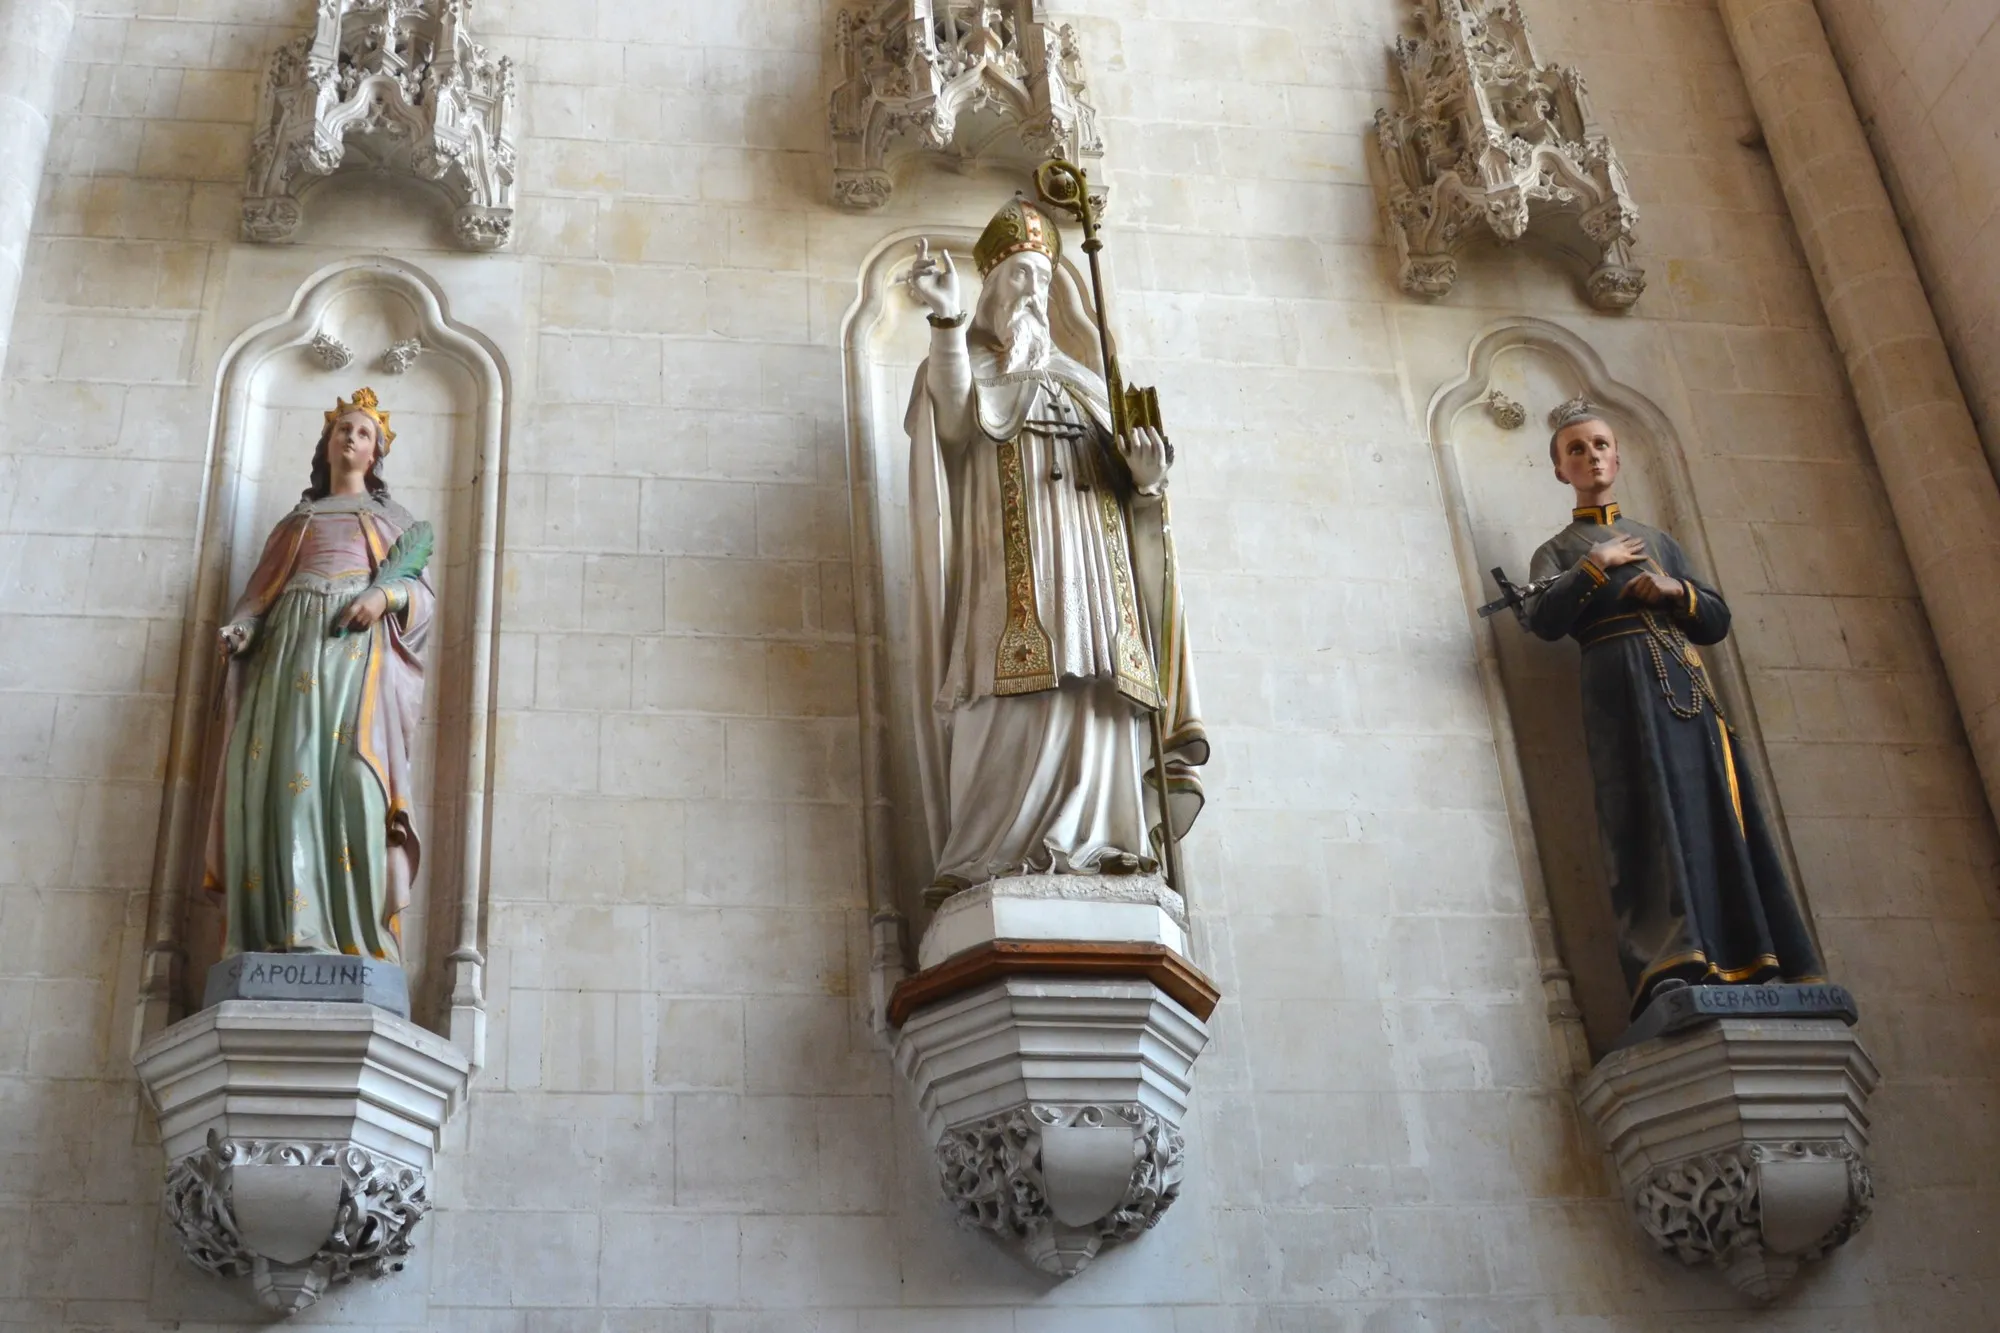 Ensemble de 3 statues du XIX ème siècle  : sainte Apolline, saint Omer, saint Gérard Majella